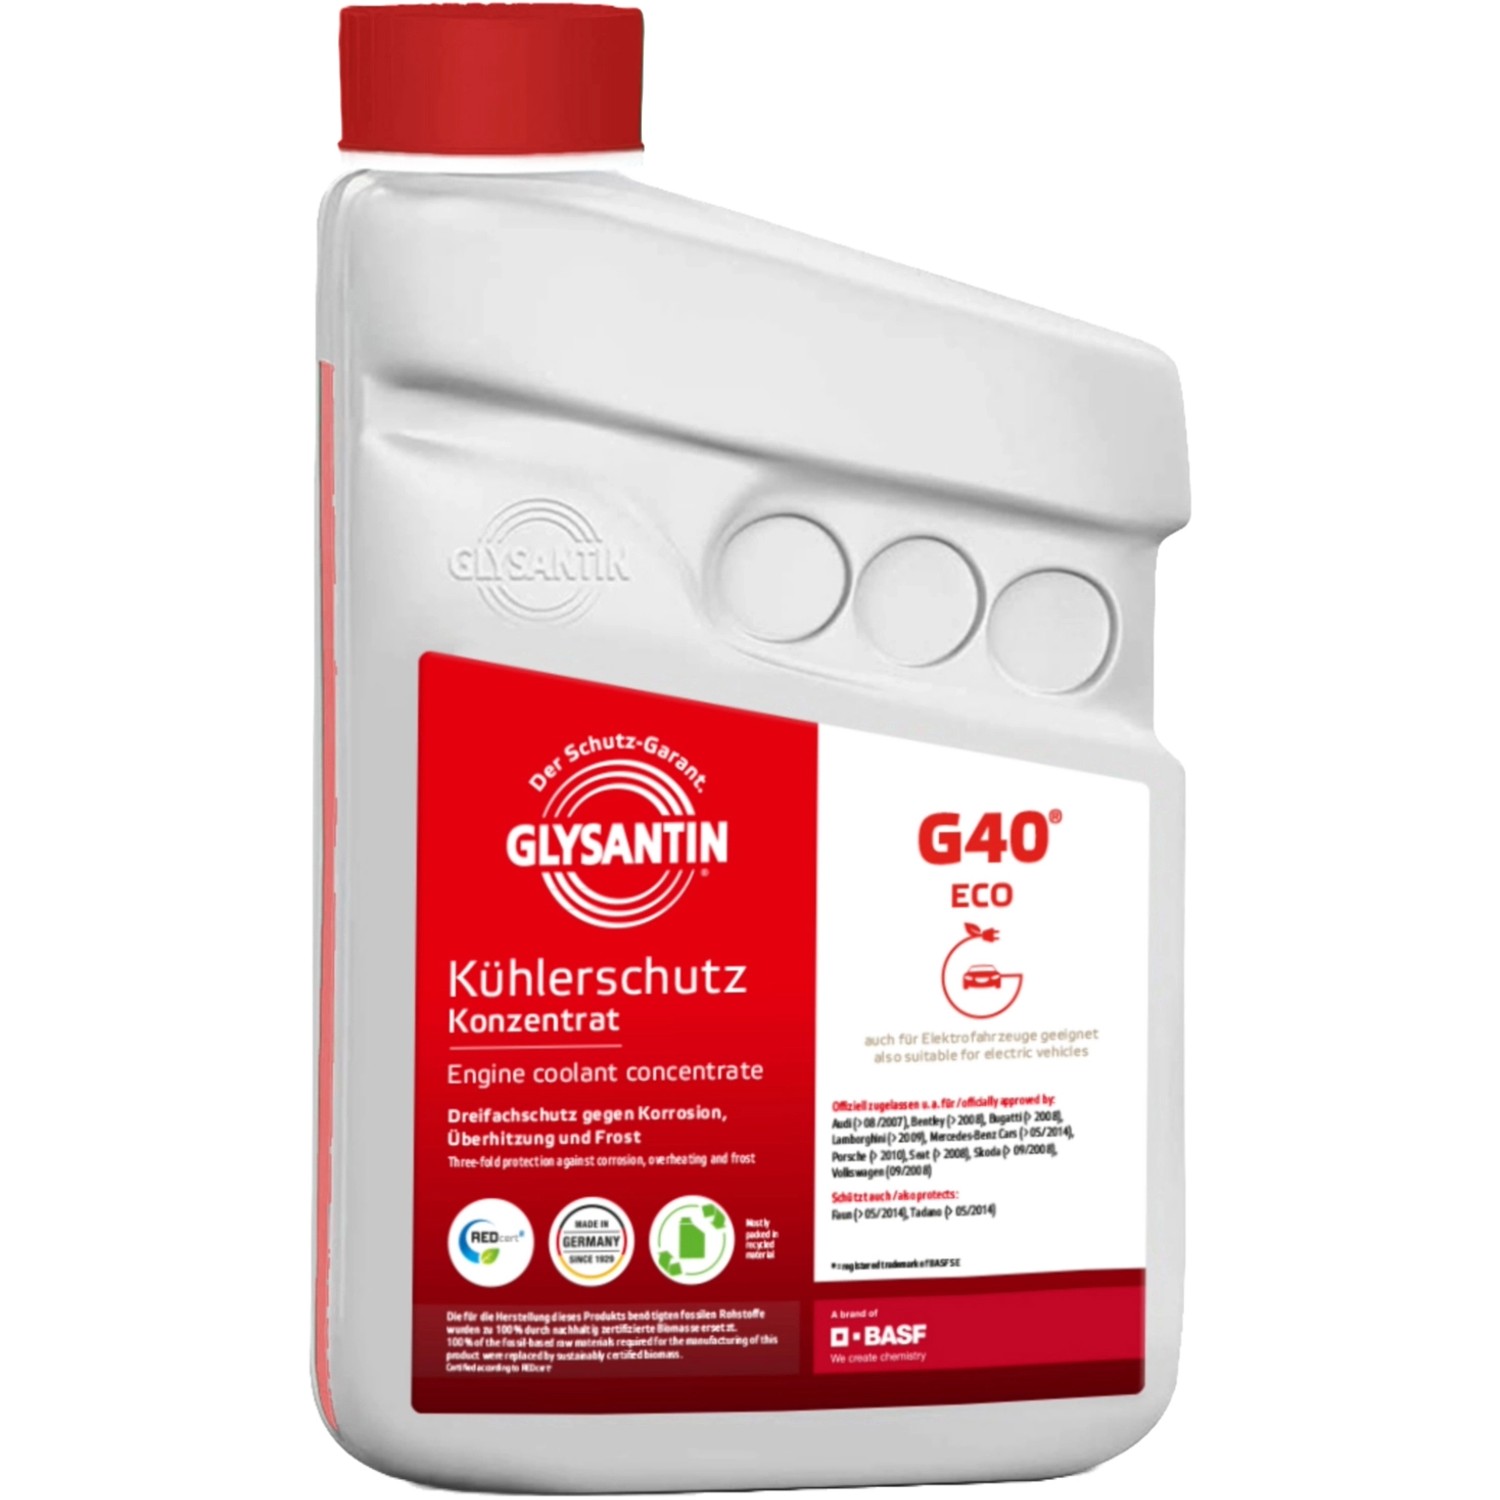 Glysantin Kühlerschutz Konzentrat G40 ECO BMB 100 1 Liter